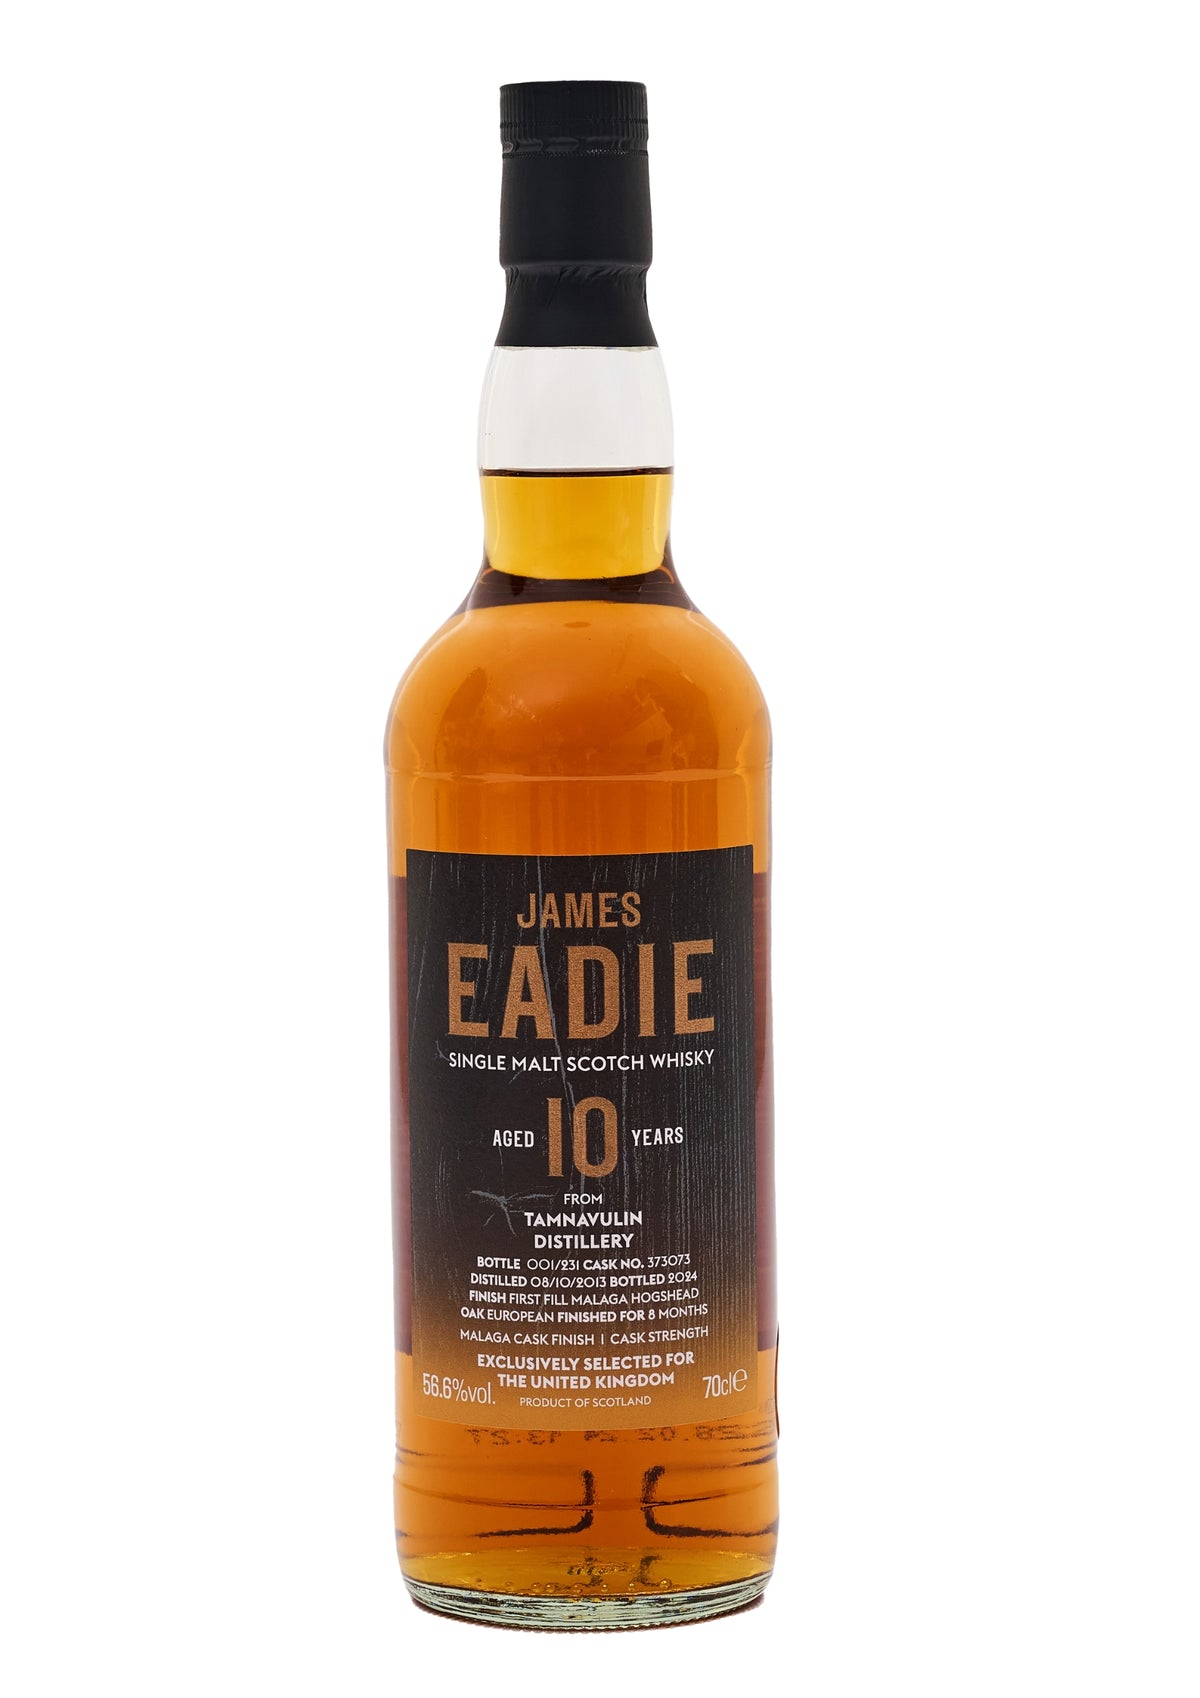 James Eadie Tamnavulin 10-Year-Old, Malaga Cask Finish, Single Malt Scotch Whisky, 56.6%